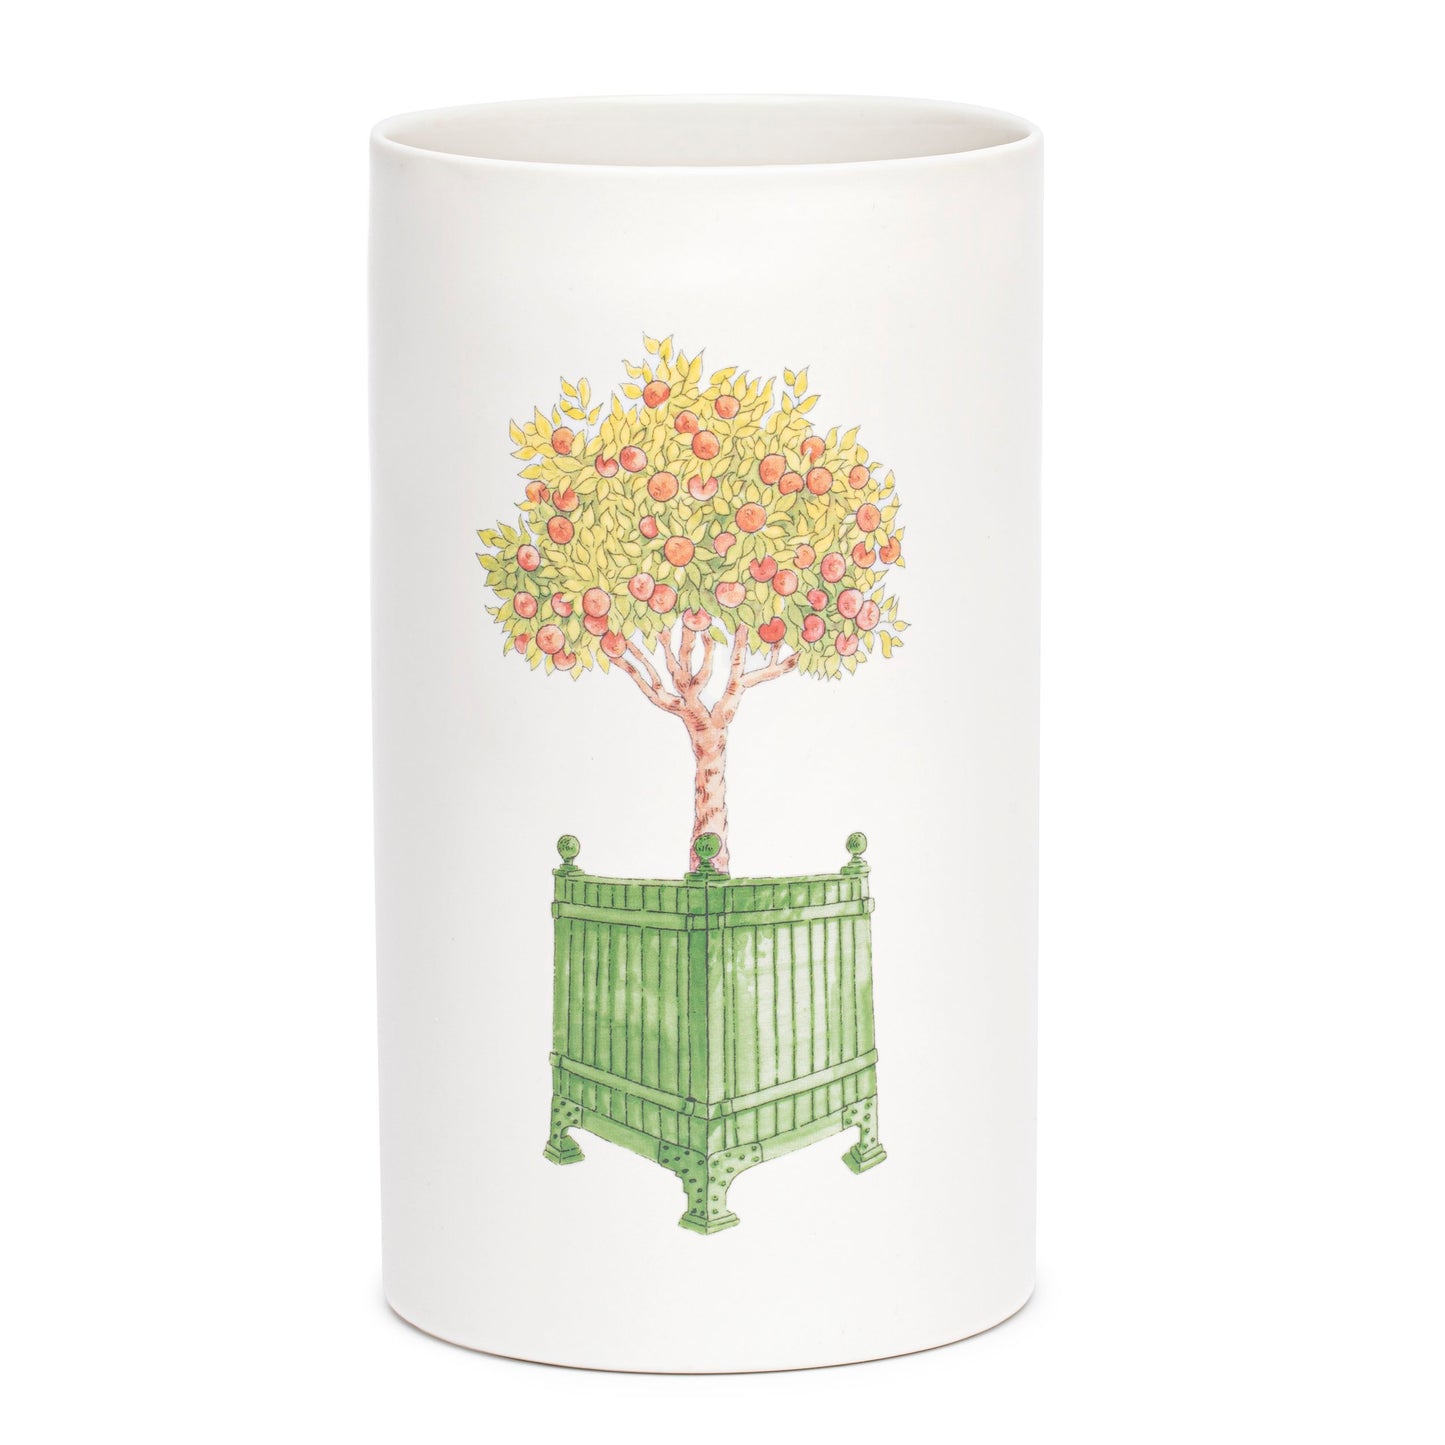 Vase | ORANGE TREE FROM THE GARDEN OF LUXEMBOURG